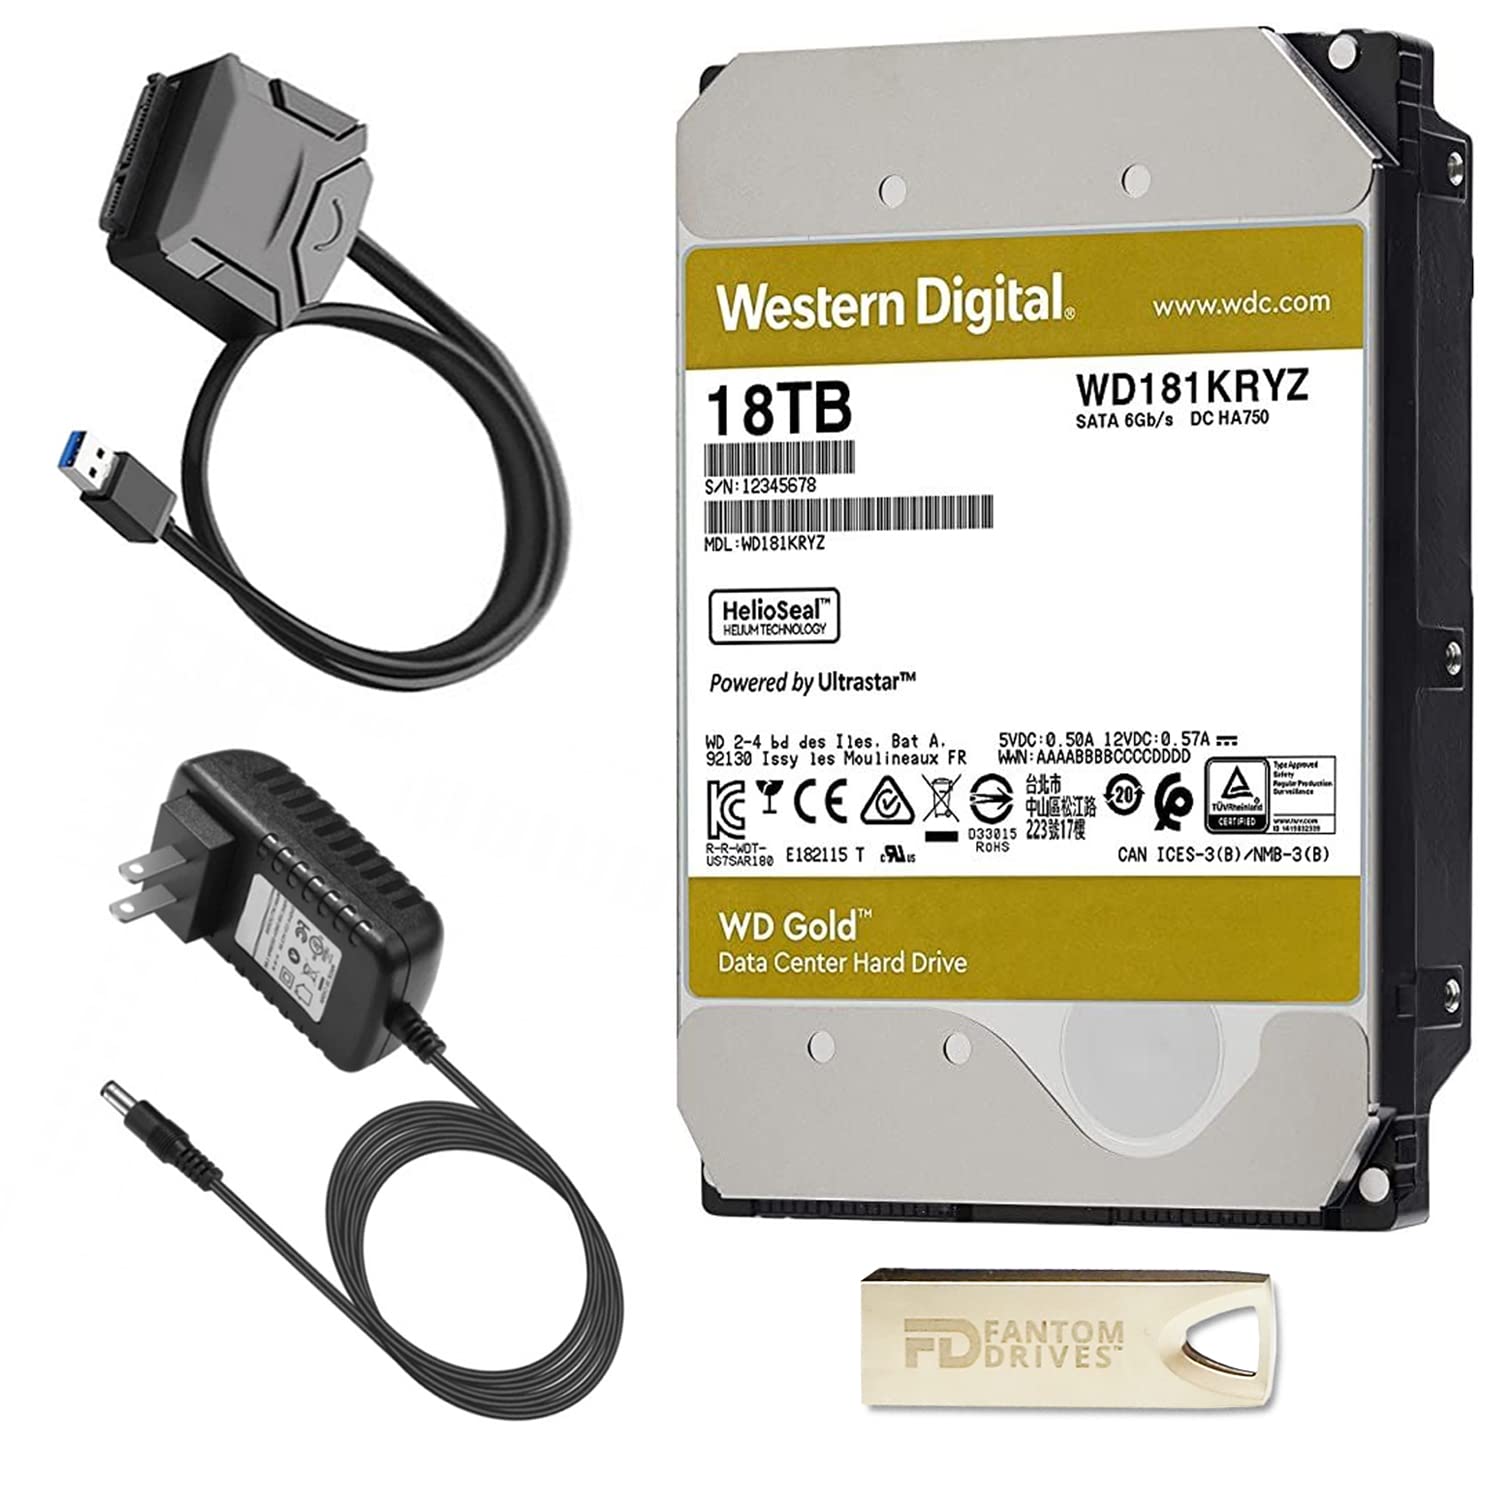 Fantom Drives 18TB Hard Drive Upgrade Kit with Western Digital WD181KRYZ Gold Enterprise Drive FD Cloning Software SATA to